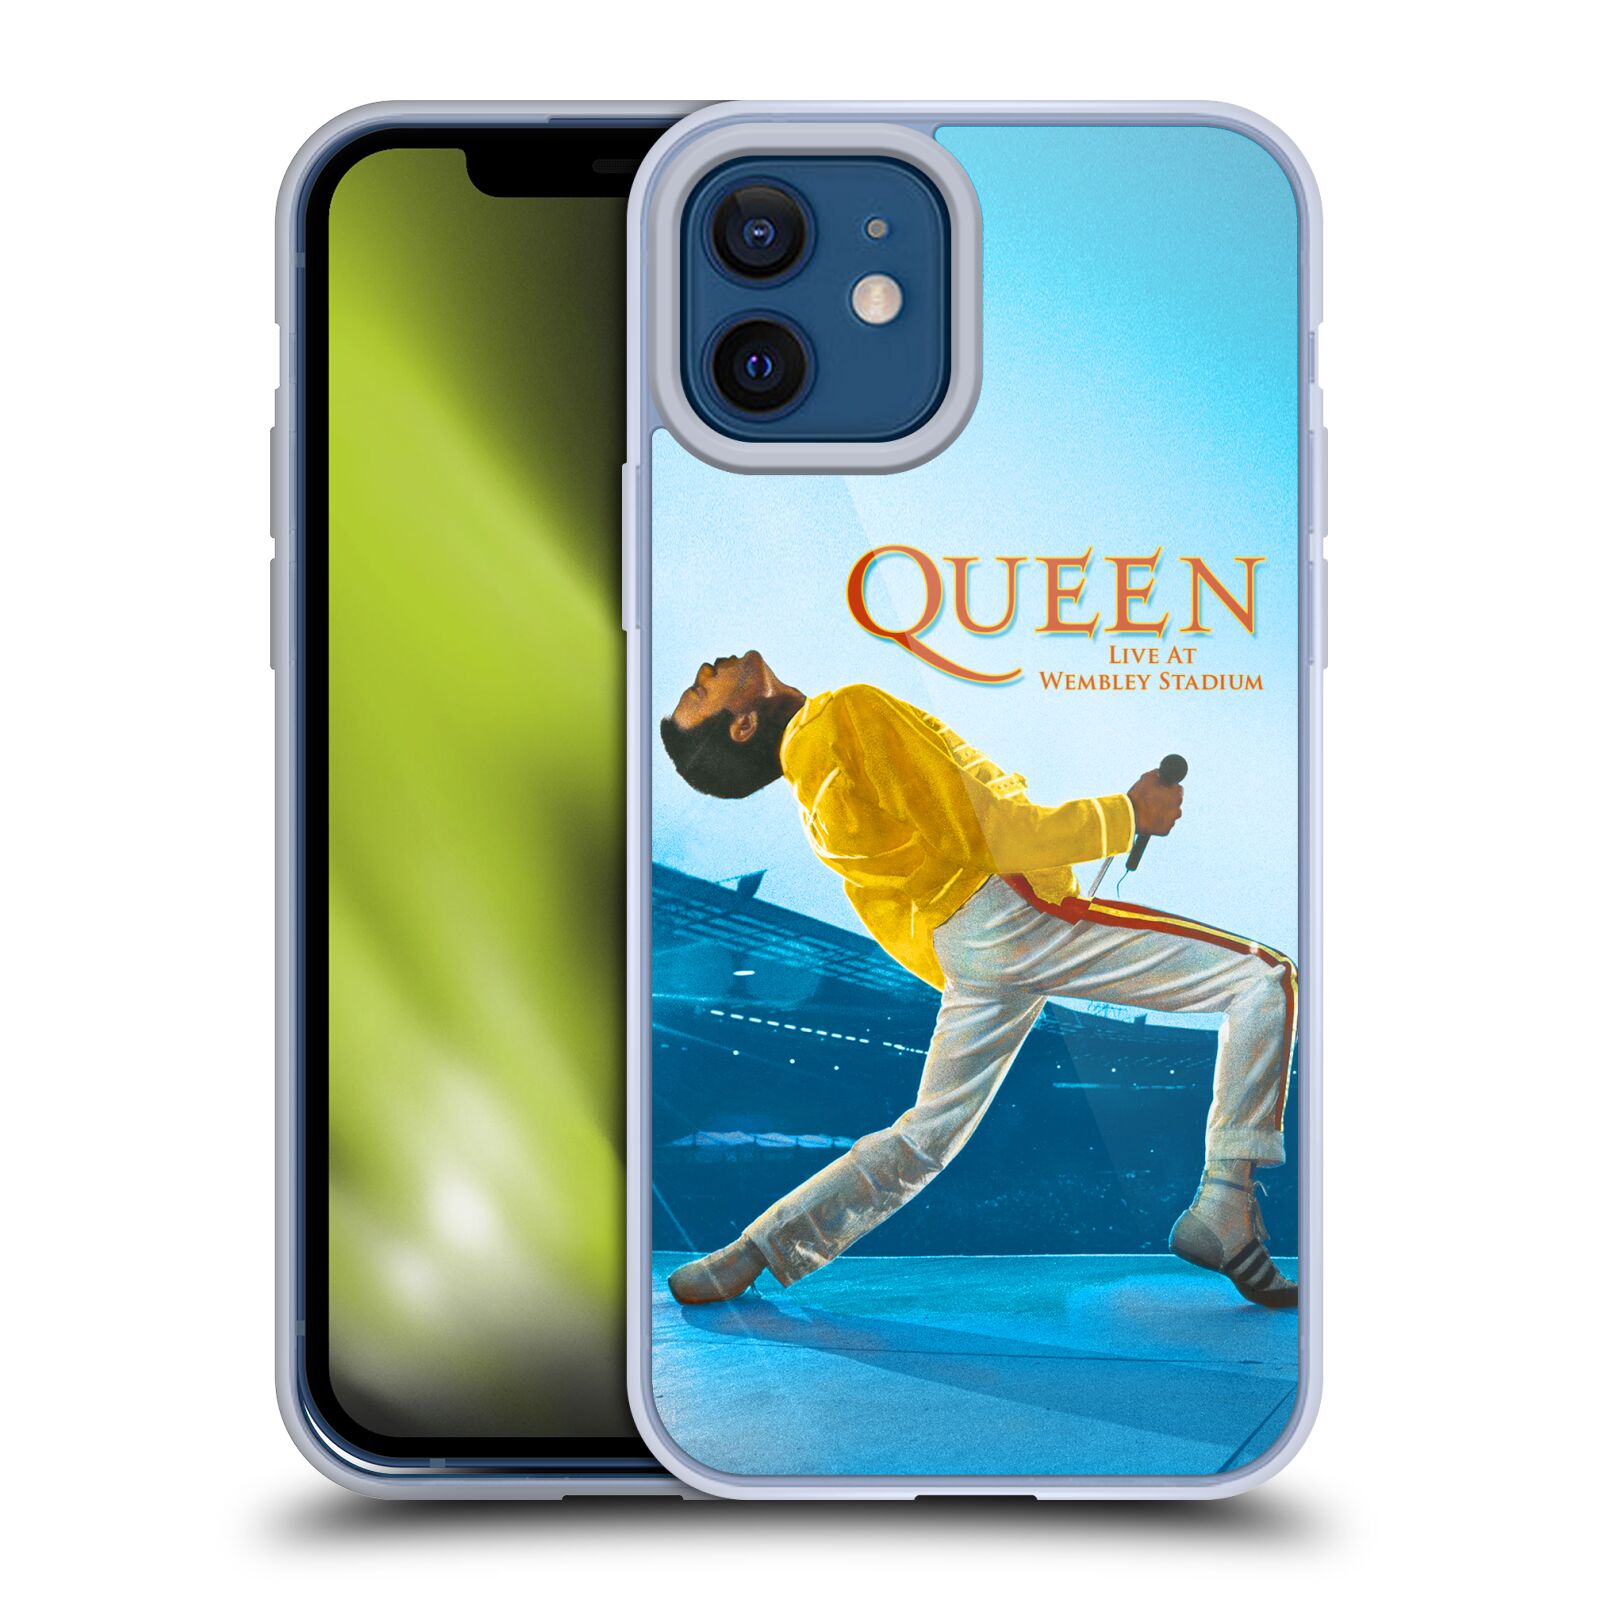 Silikonové pouzdro na mobil Apple iPhone 12 / 12 Pro - Head Case - Queen - Freddie Mercury (Silikonový kryt, obal, pouzdro na mobilní telefon Apple iPhone 12 / Apple iPhone 12 Pro (6,1") s motivem Queen - Freddie Mercury)